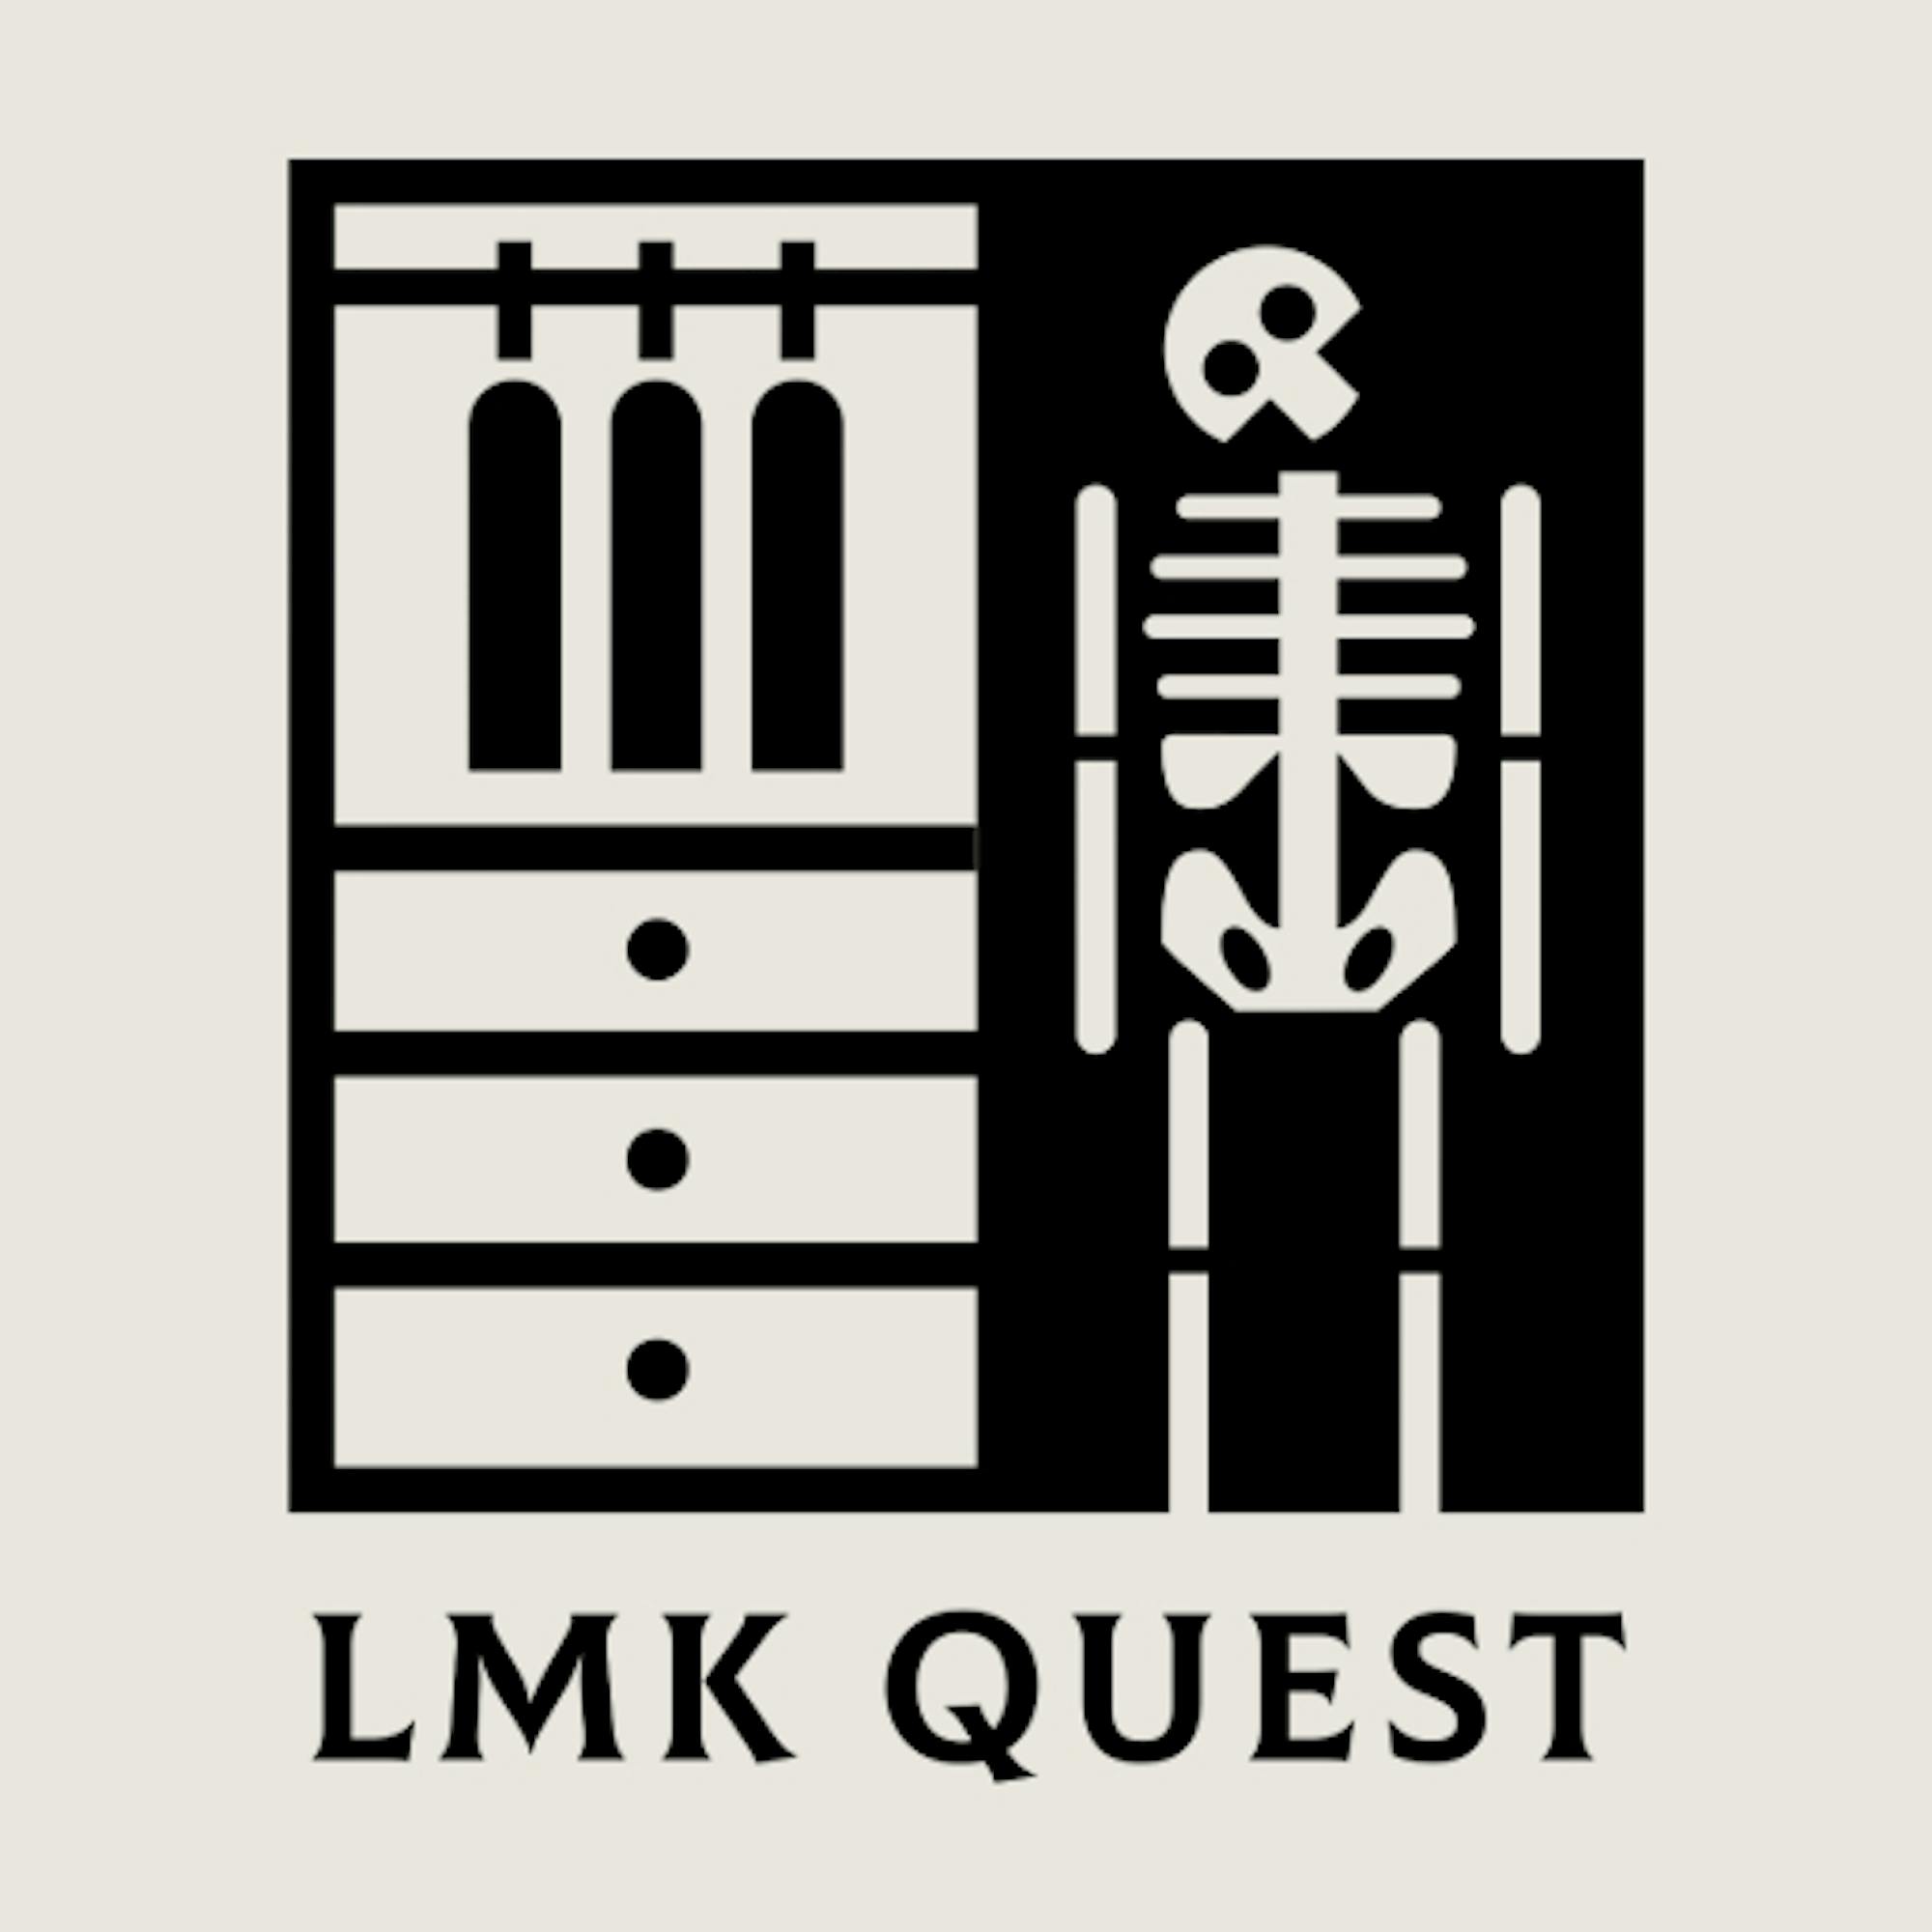 LMK Quest